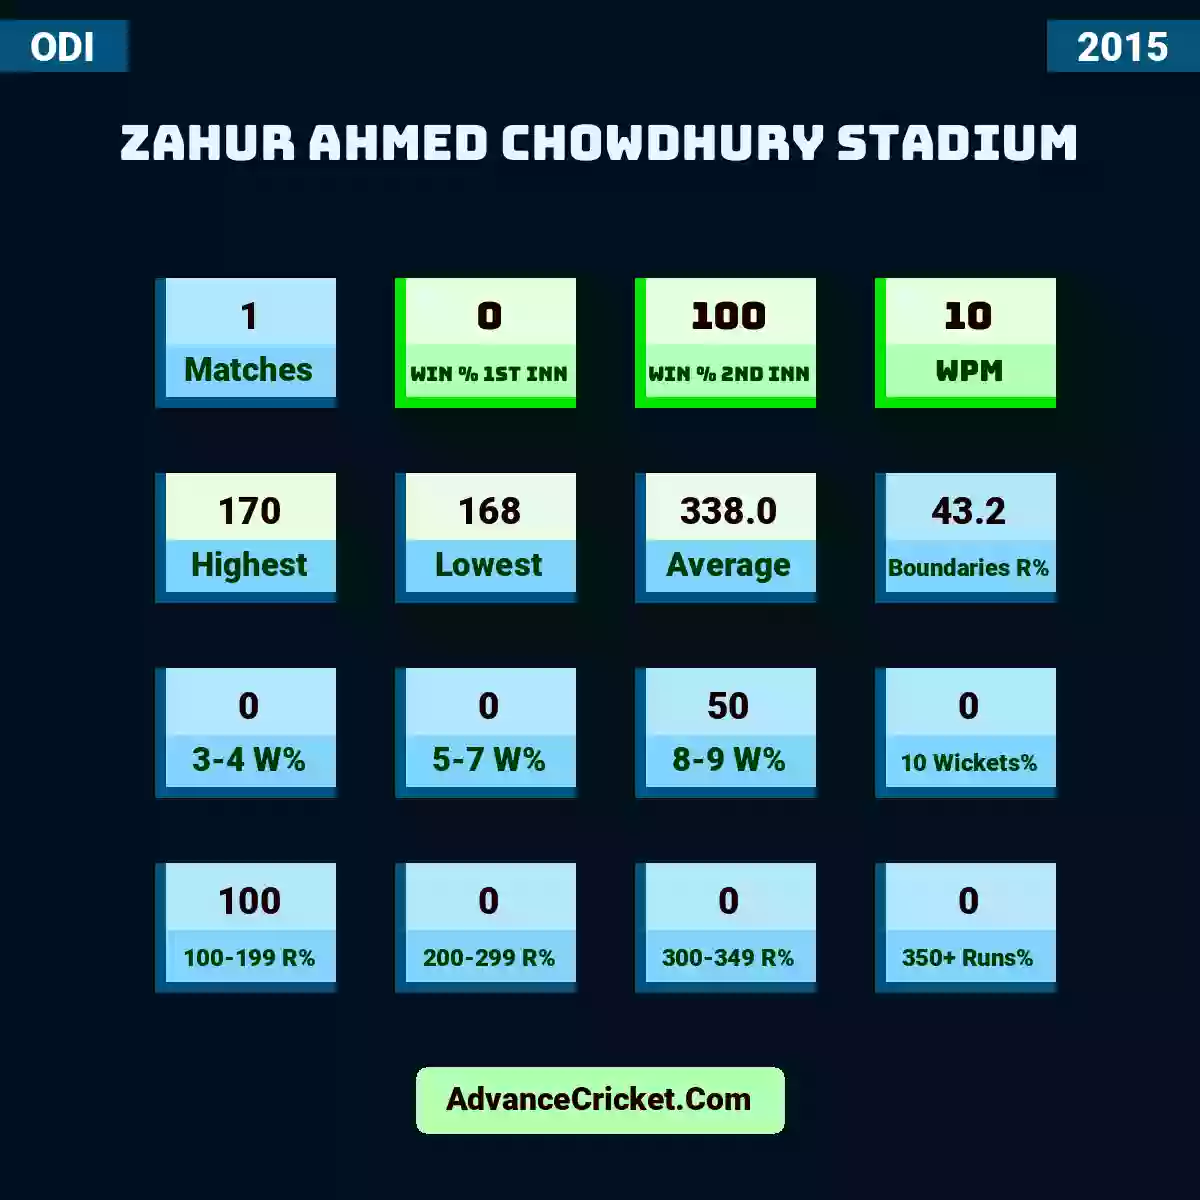 Image showing Zahur Ahmed Chowdhury Stadium with Matches: 1, Win % 1st Inn: 0, Win % 2nd Inn: 100, WPM: 10, Highest: 170, Lowest: 168, Average: 338.0, Boundaries R%: 43.2, 3-4 W%: 0, 5-7 W%: 0, 8-9 W%: 50, 10 Wickets%: 0, 100-199 R%: 100, 200-299 R%: 0, 300-349 R%: 0, 350+ Runs%: 0.